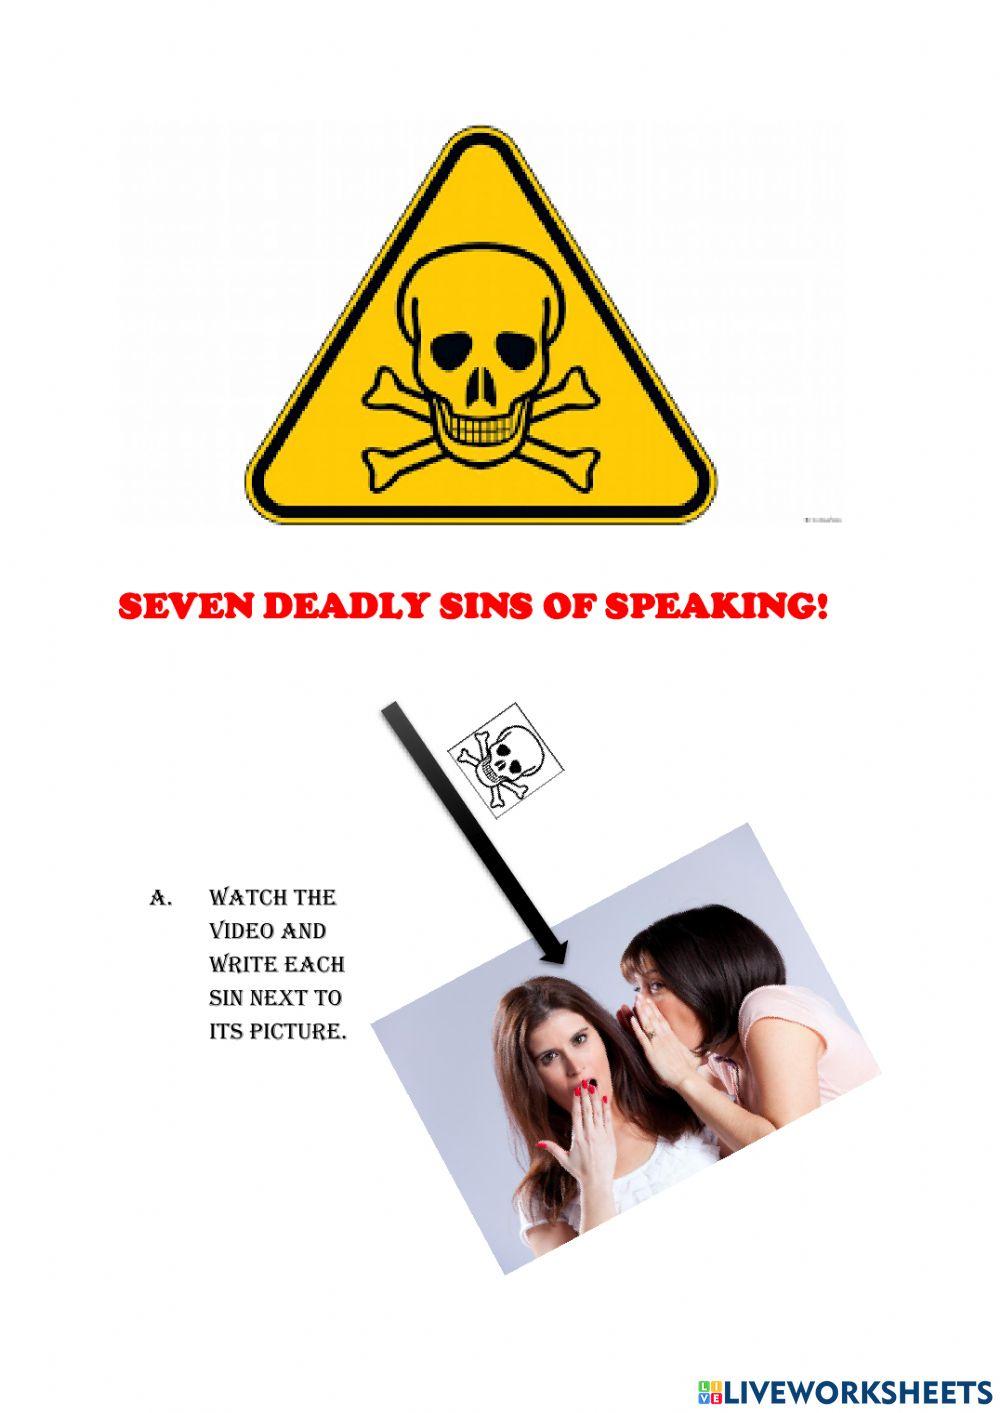 Seven deadly sins of speaking